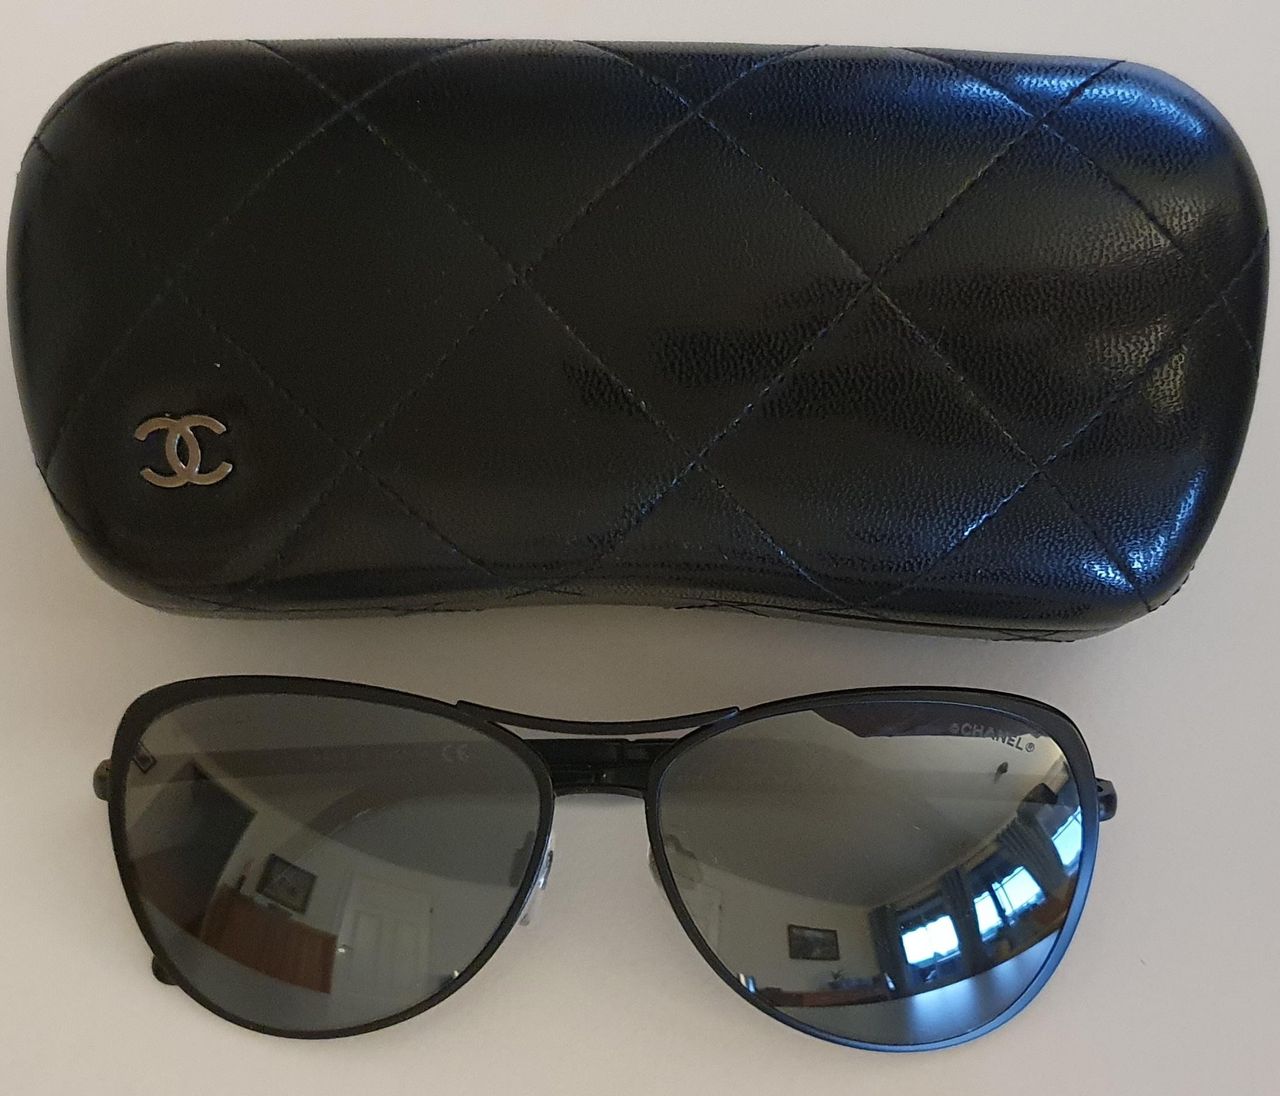 Chanel 4223 Pilot Aviator solbriller / sunglasses